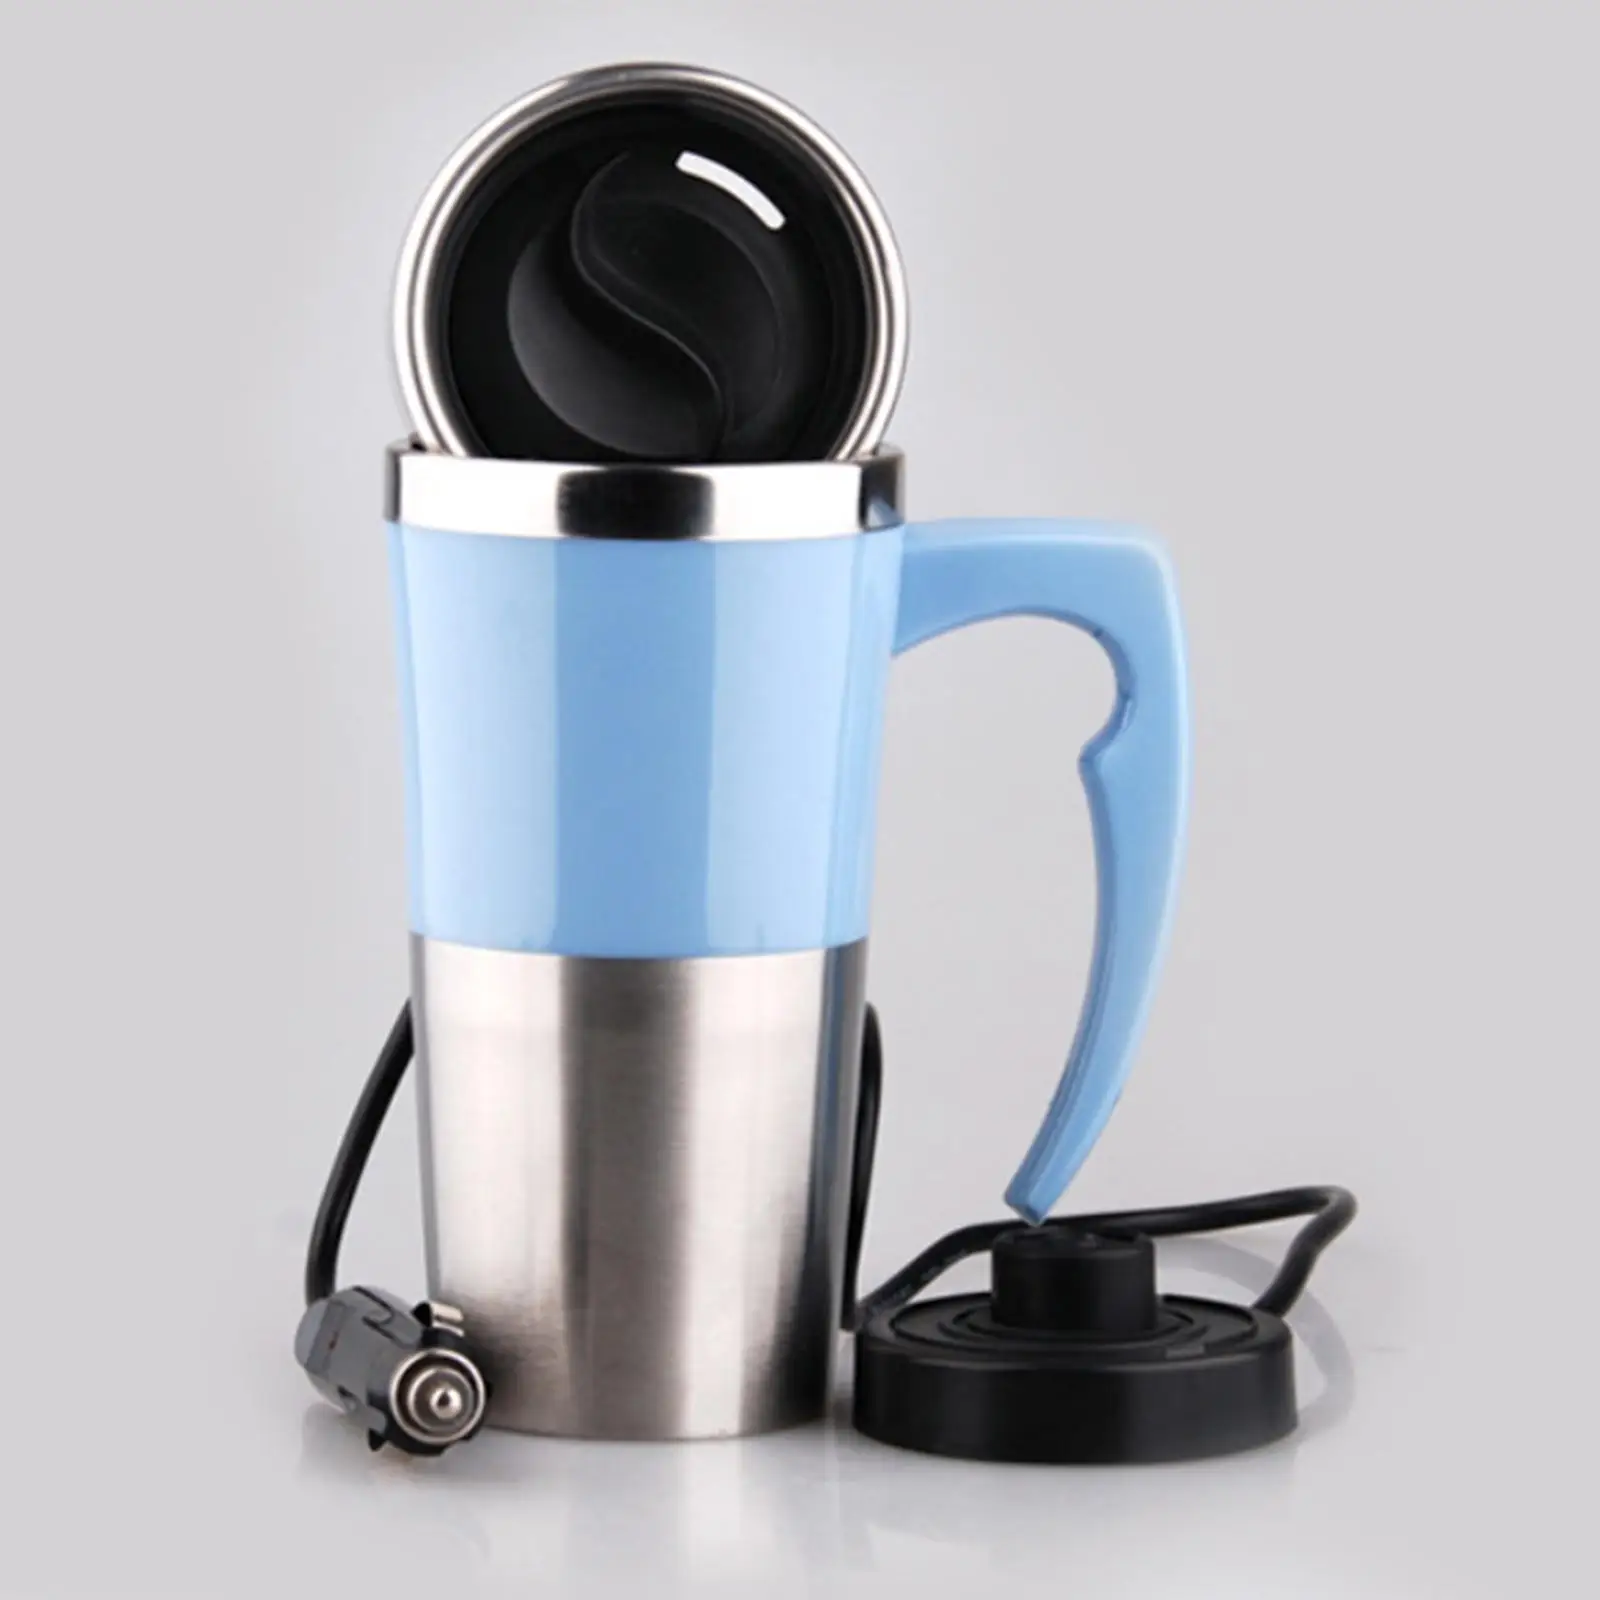  Kettle/ 12V 350ml, Portable, Stainless Steel, Electric,Auto Heating Bottle Mug for Tea   Making